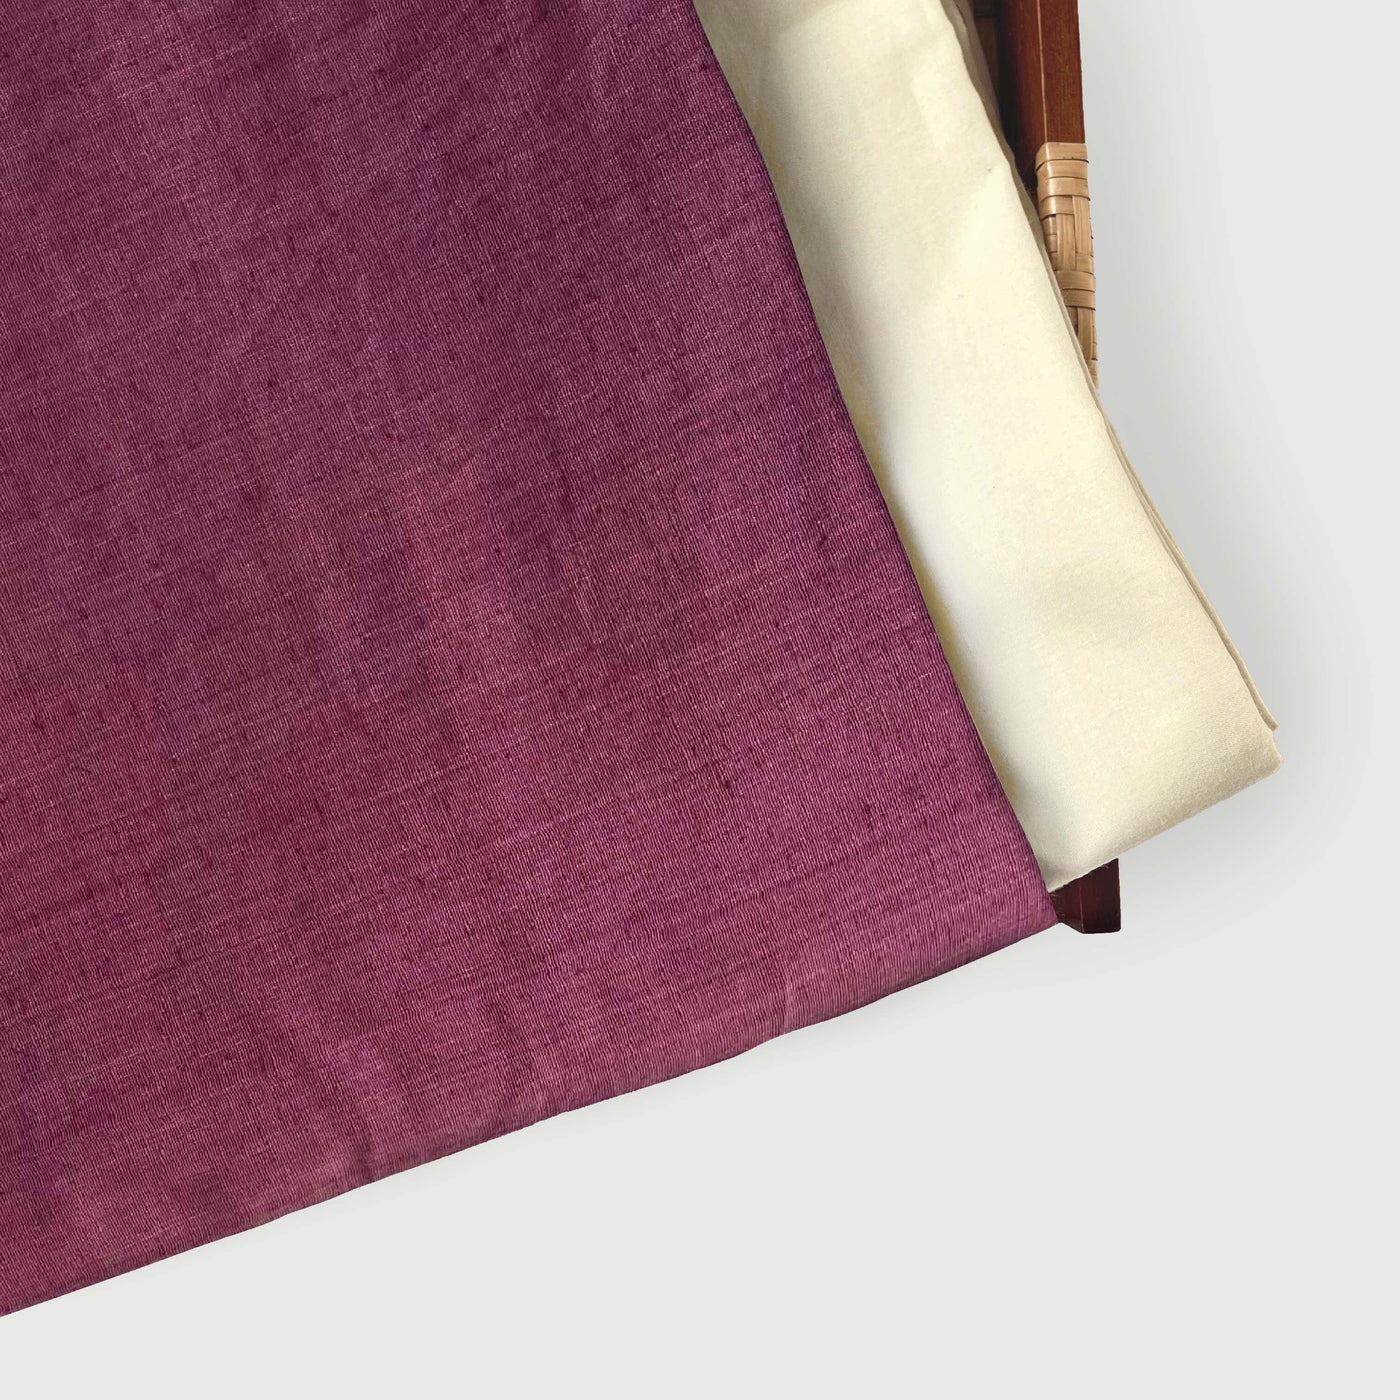 Blended Silk Linen Kurta Set Kurta Set Unisex Muted Magenta Color | Blended Silk Linen Kurta Fabric (1.80 Meters) | And Cotton Pyjama (2.5 Meters) | Unstitched Combo Set